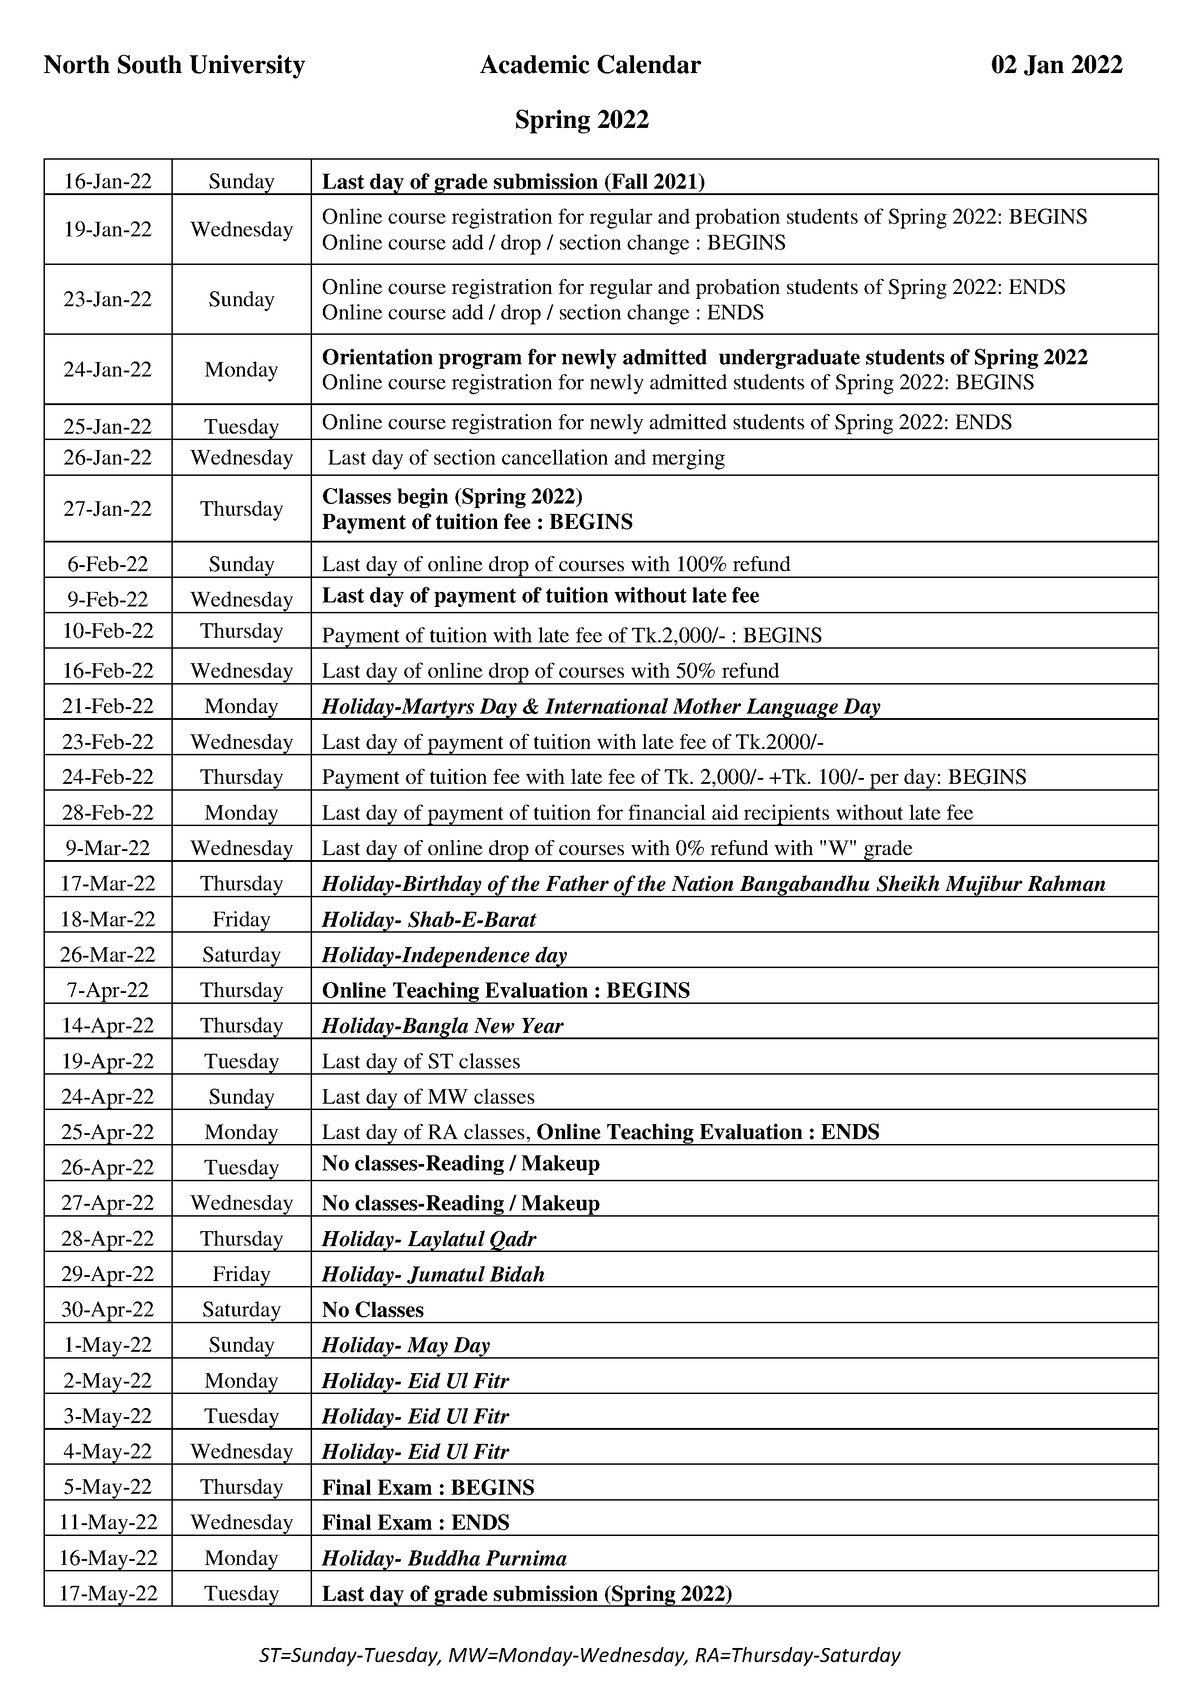 5 240 Academic Calendar Spring 2022 2 January 22 North South University Academic Calendar 02